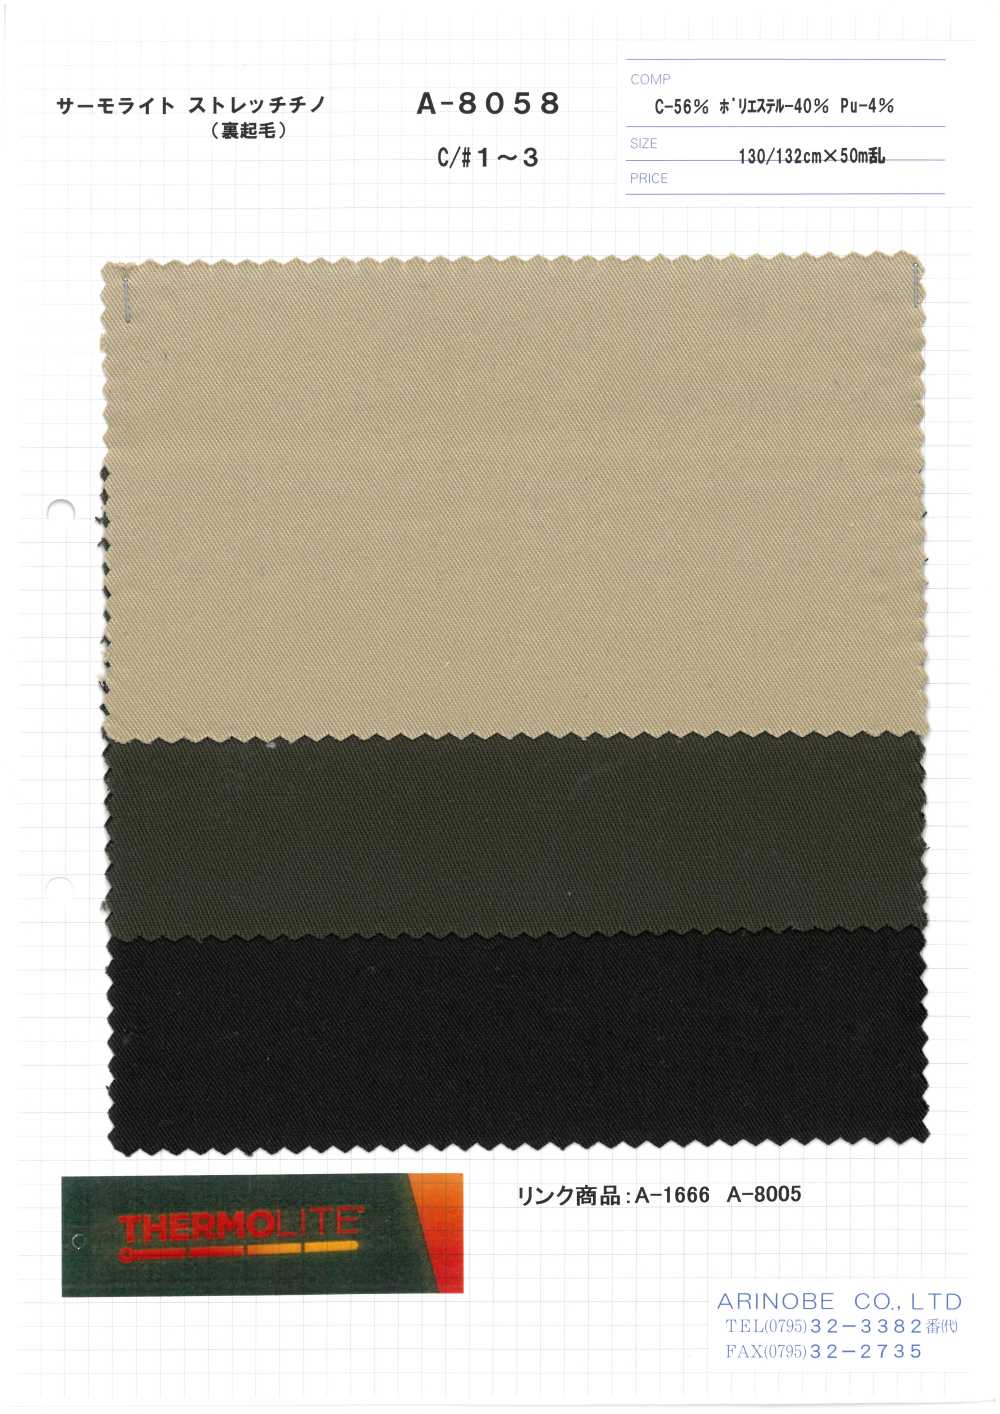 A-8058 Thermolite Stretch Chino (Fuzzy Lining)[Textile / Fabric] ARINOBE CO., LTD.